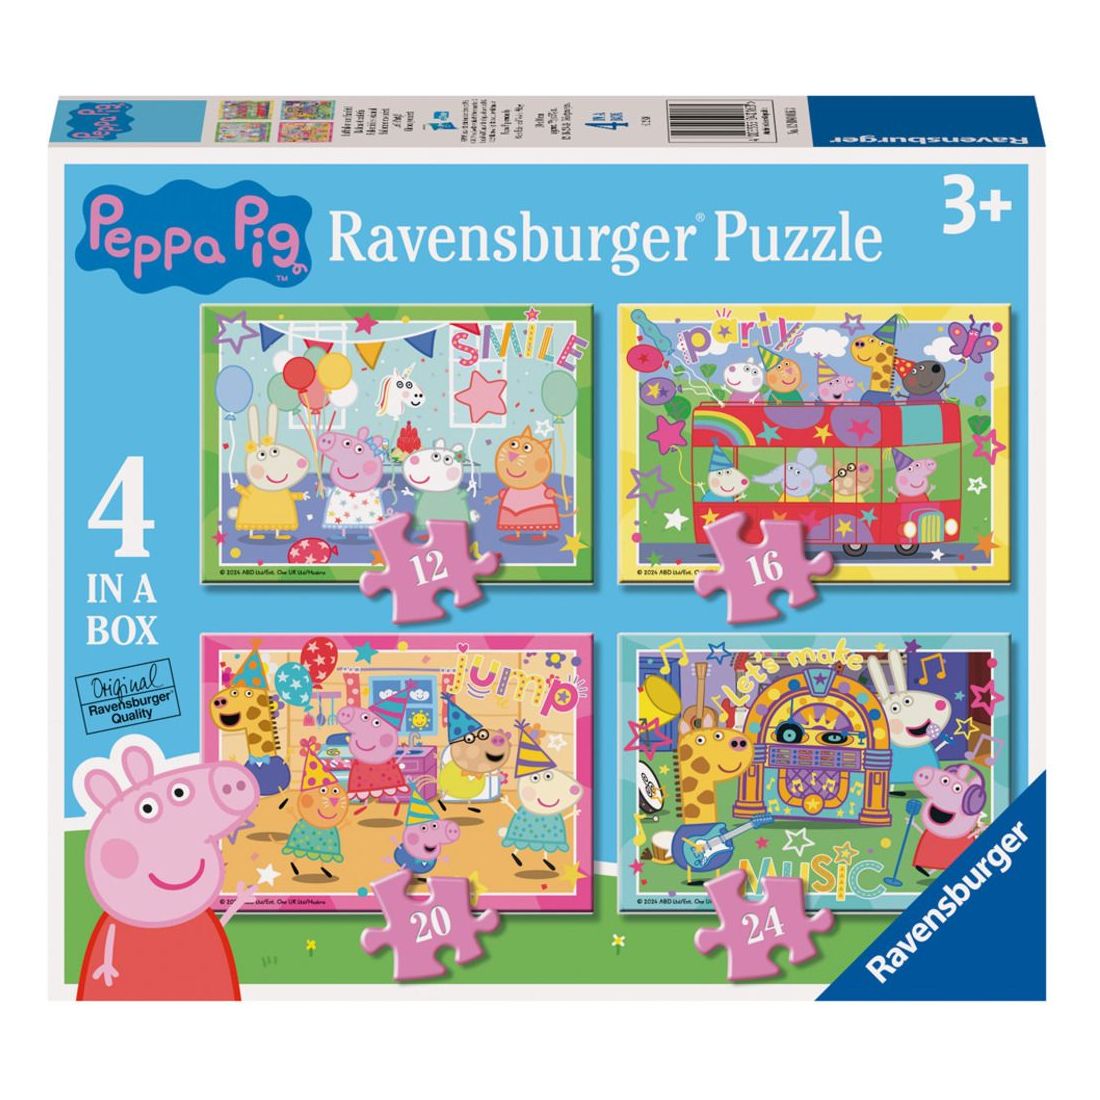 Peppa Pig 4 in a Box Jigsaw Puzzle Ravensburger